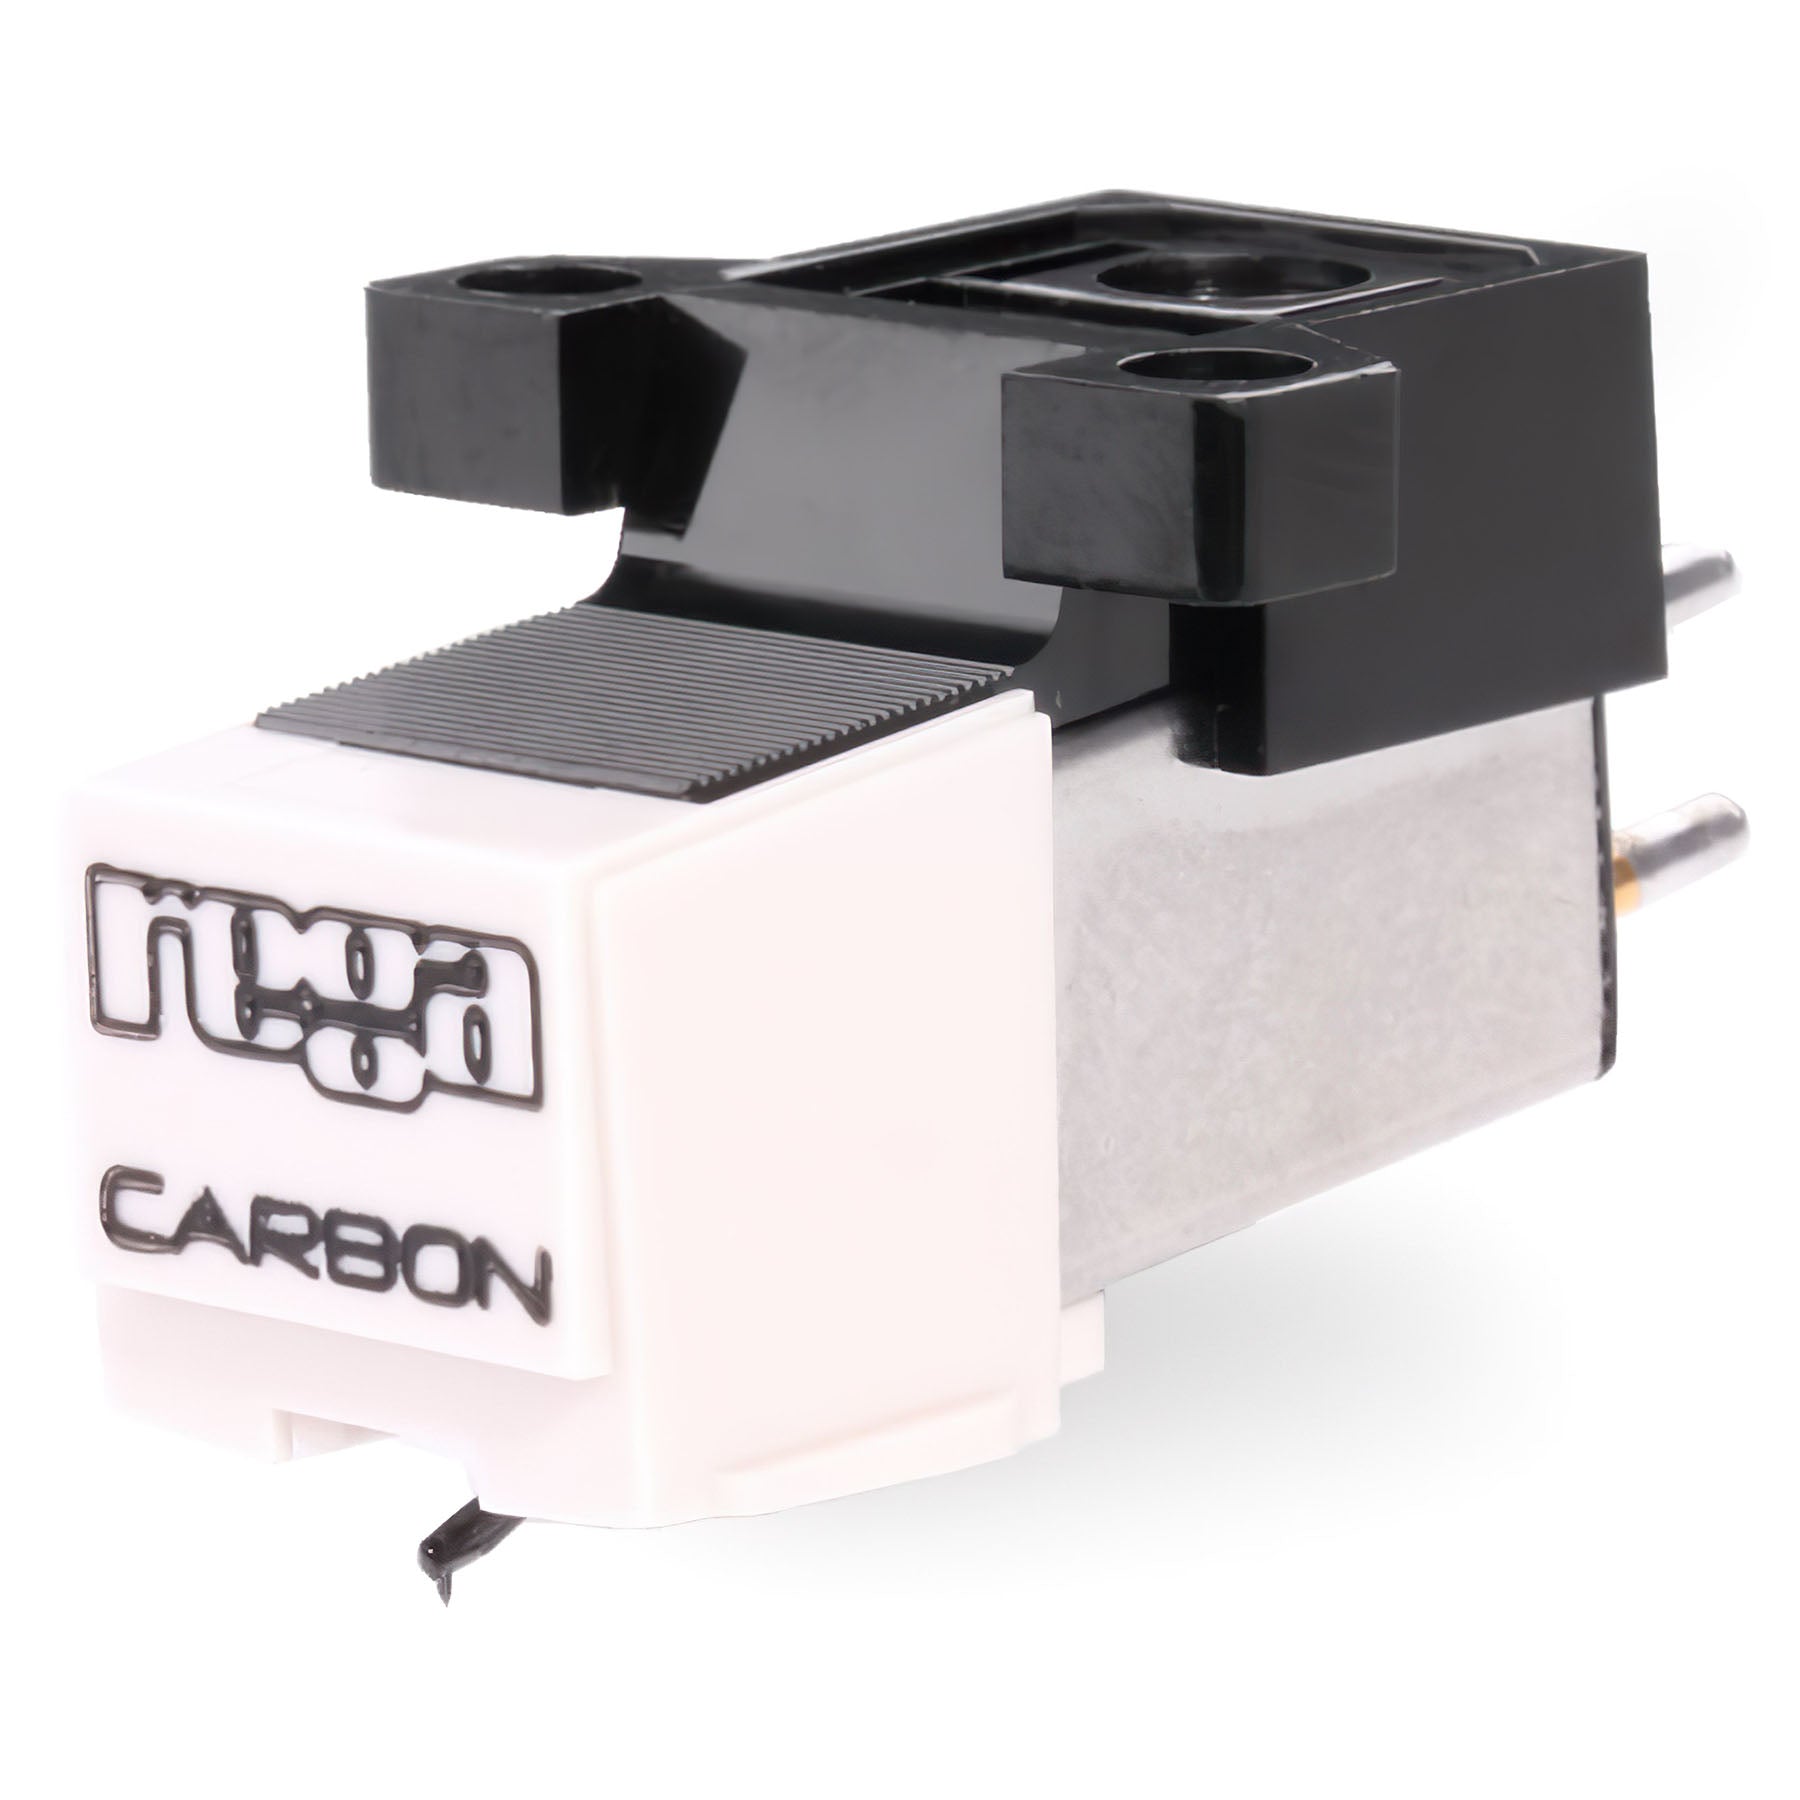 Rega Carbon Cartridge